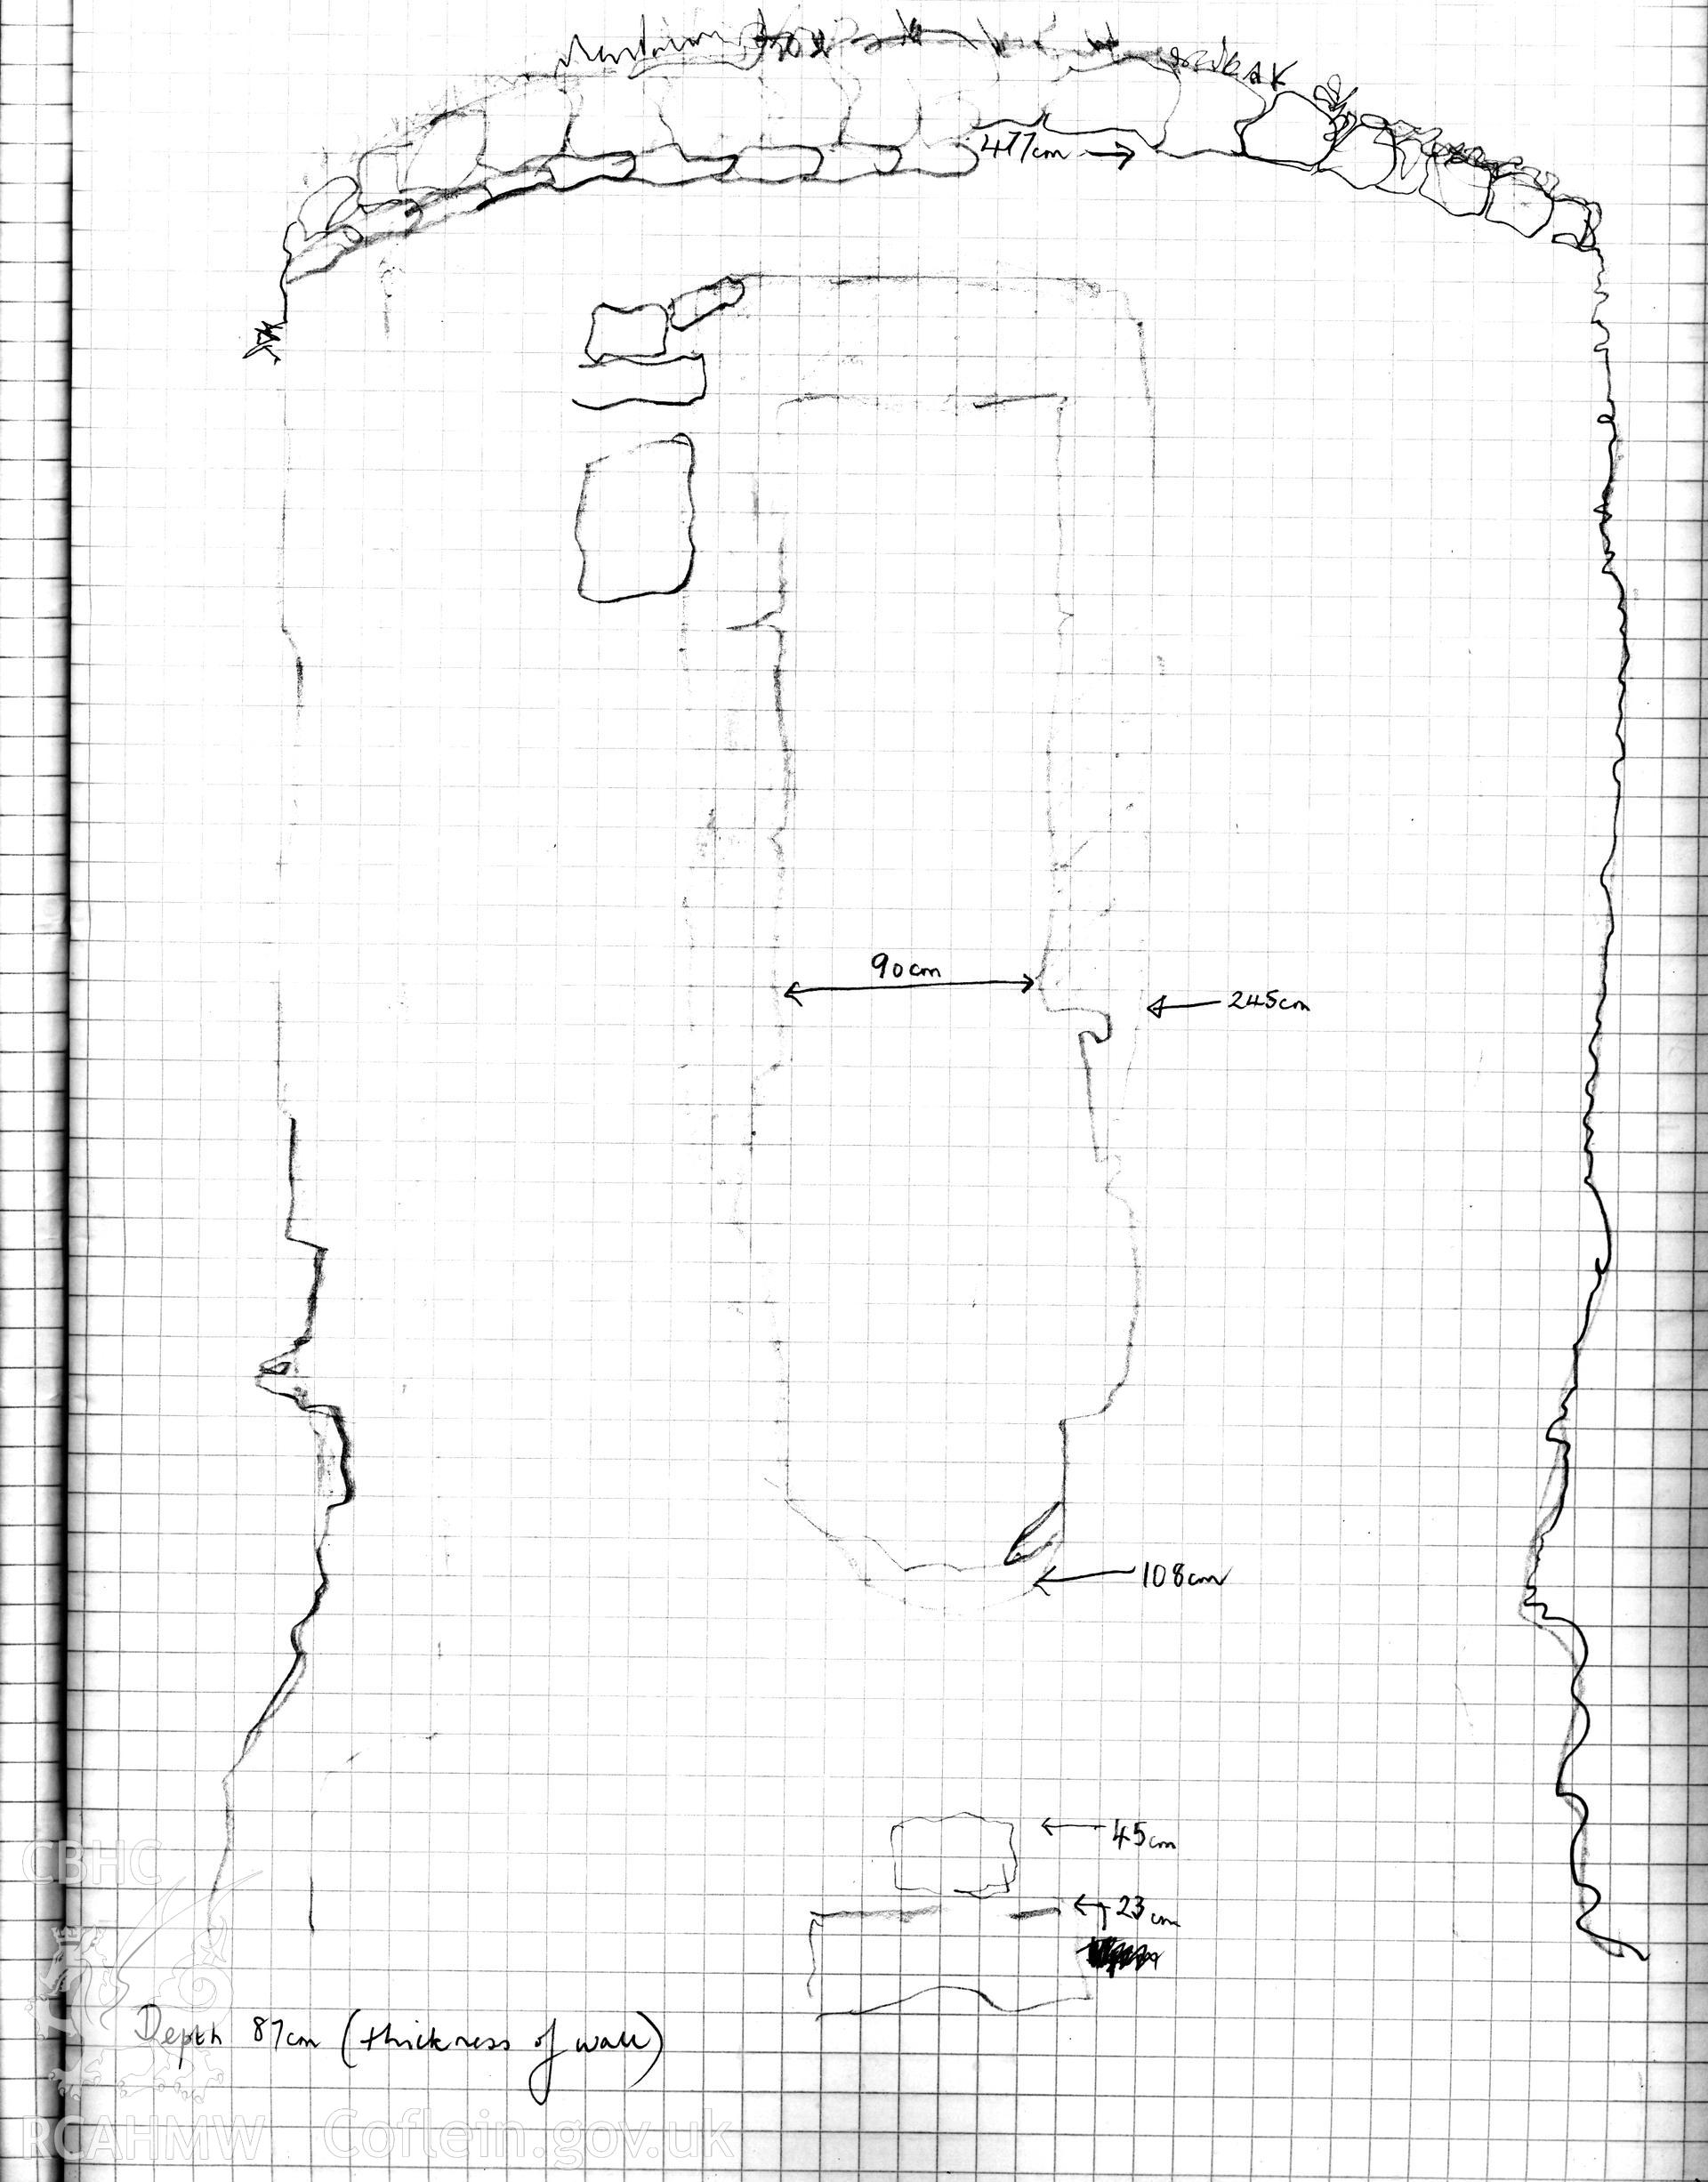 Bosherston Windmill, sketch plan from S, drawn in February 2015.